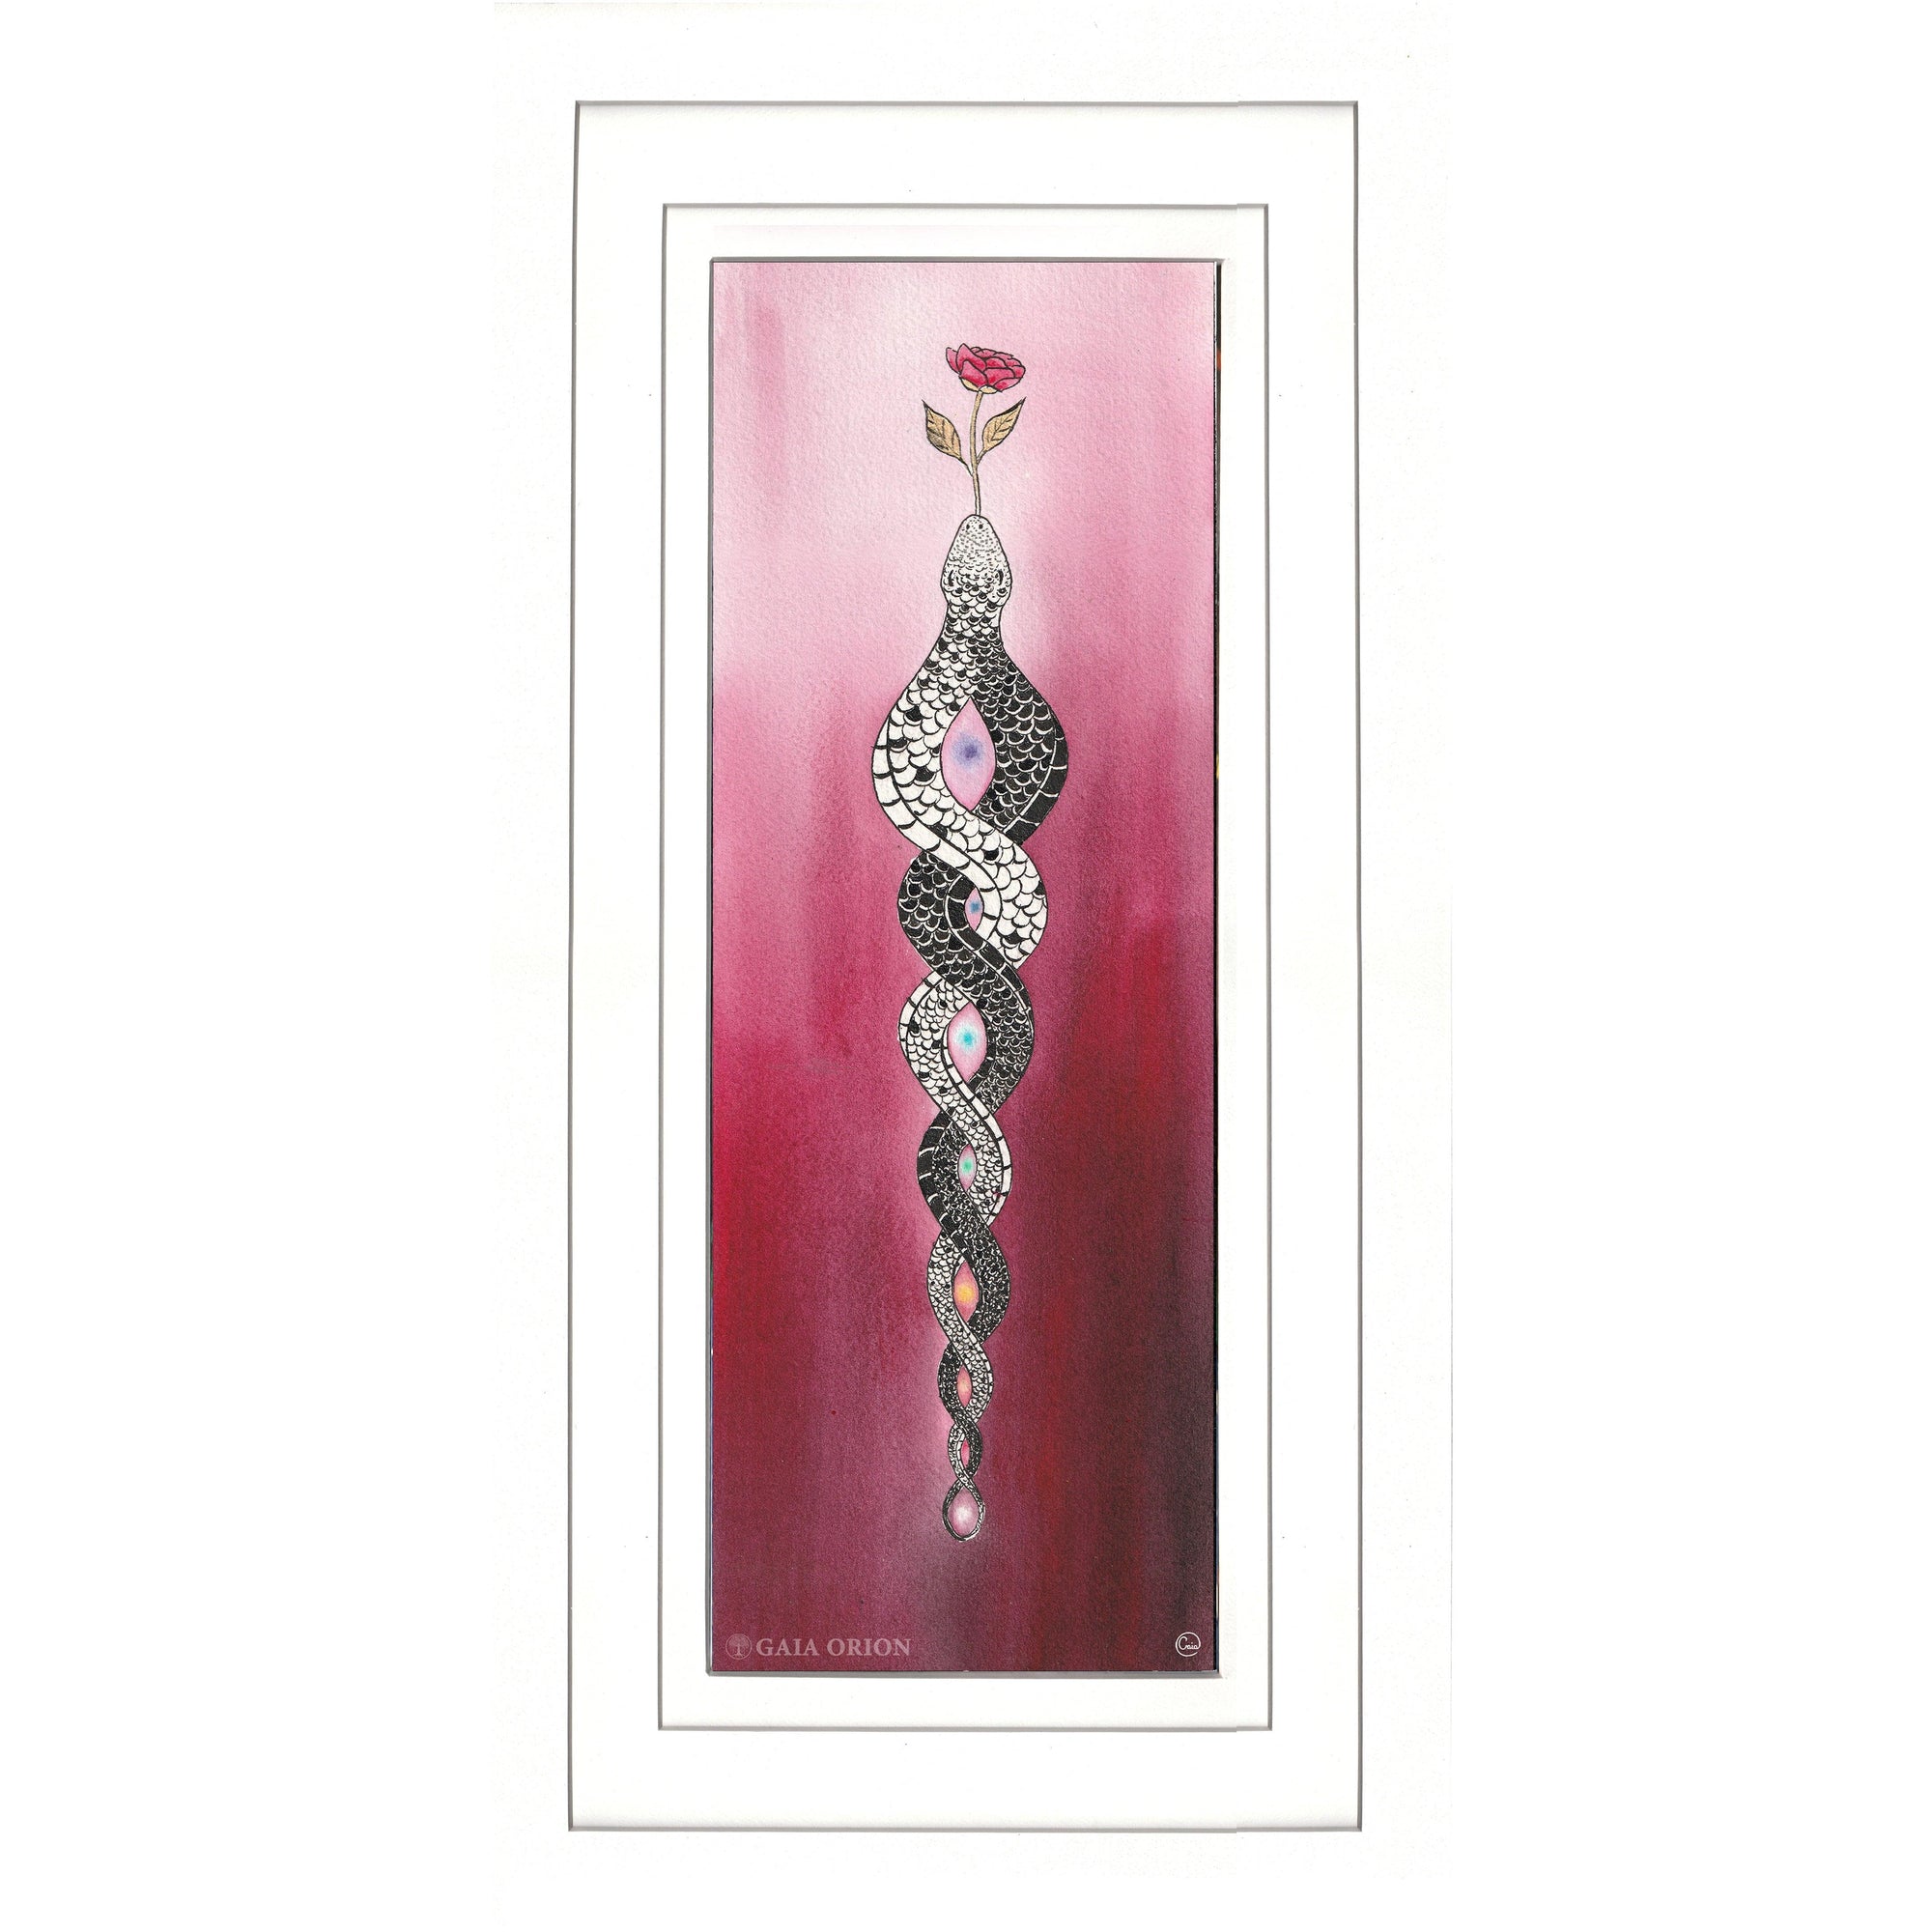 Tantric Union - Watercolour and Acrylic Paint - 36 x 12 cm - Gaia Orion Art